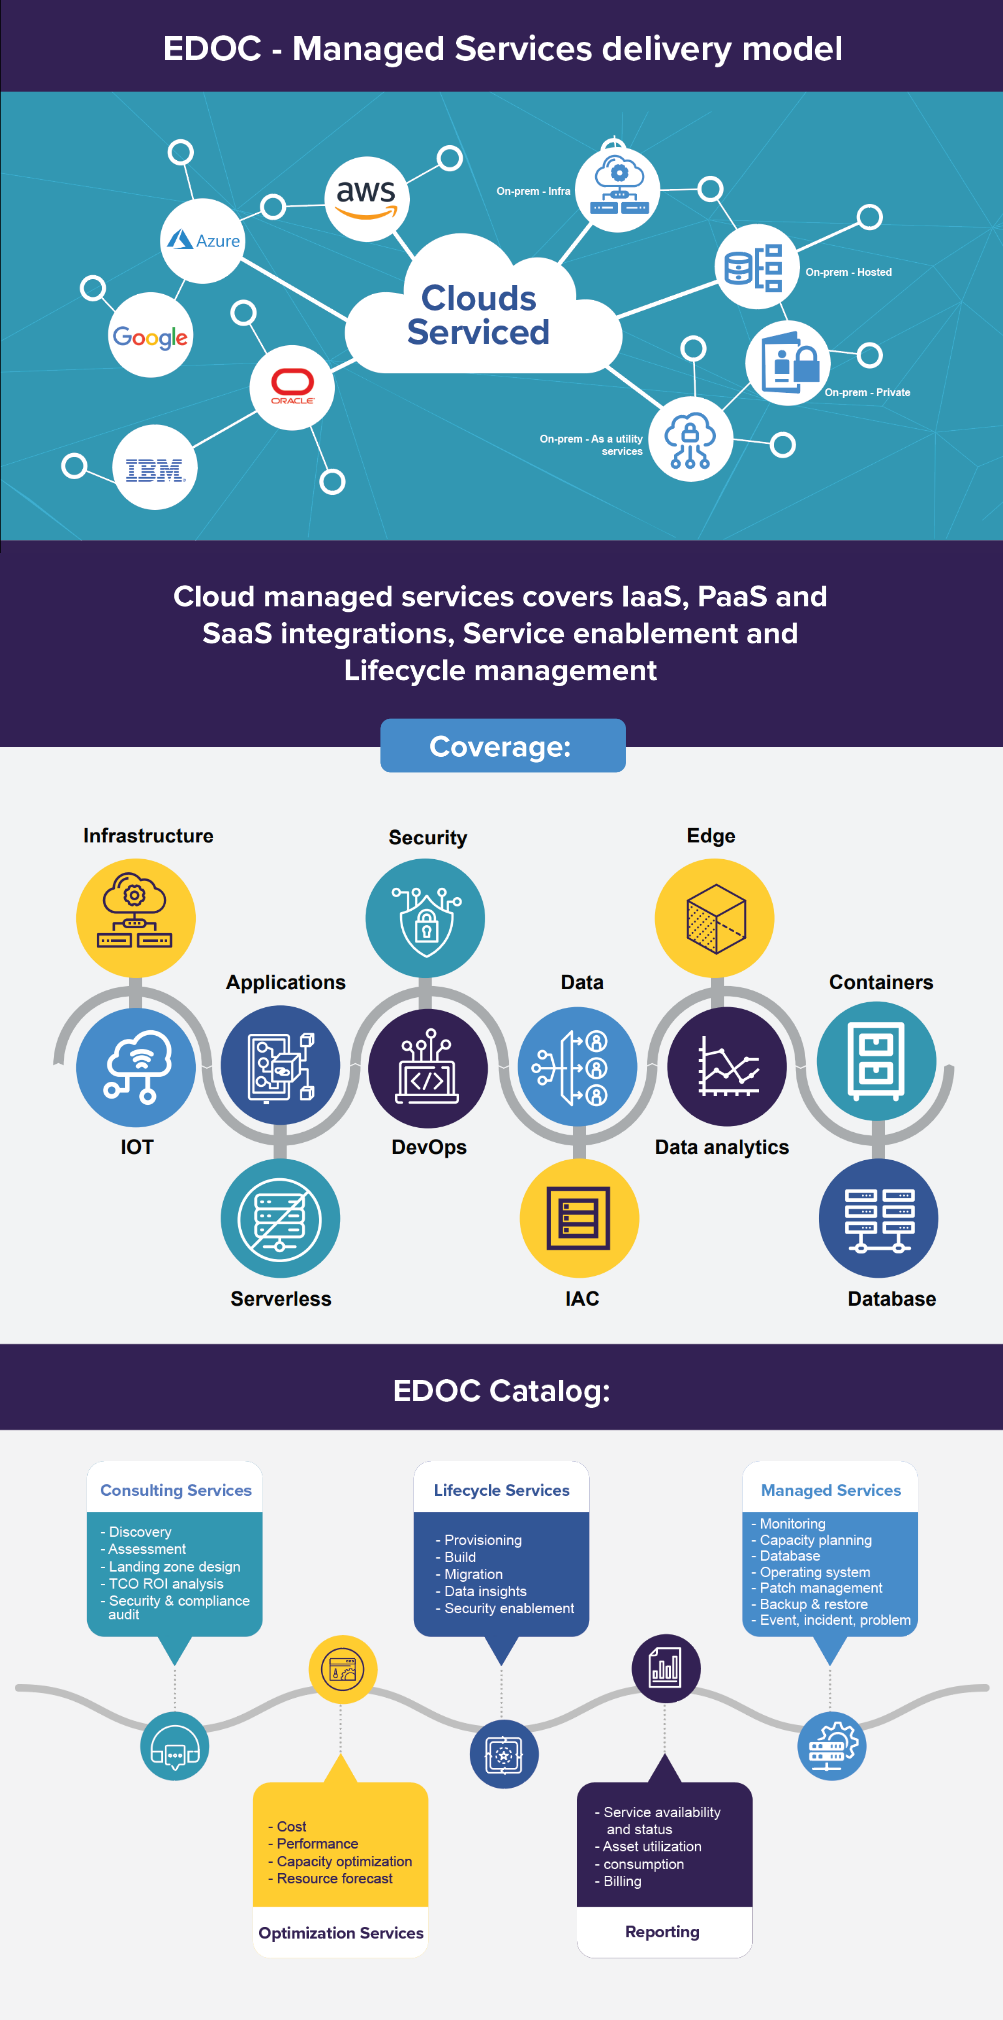 Enterprise Digital Operations Center (EDOC)